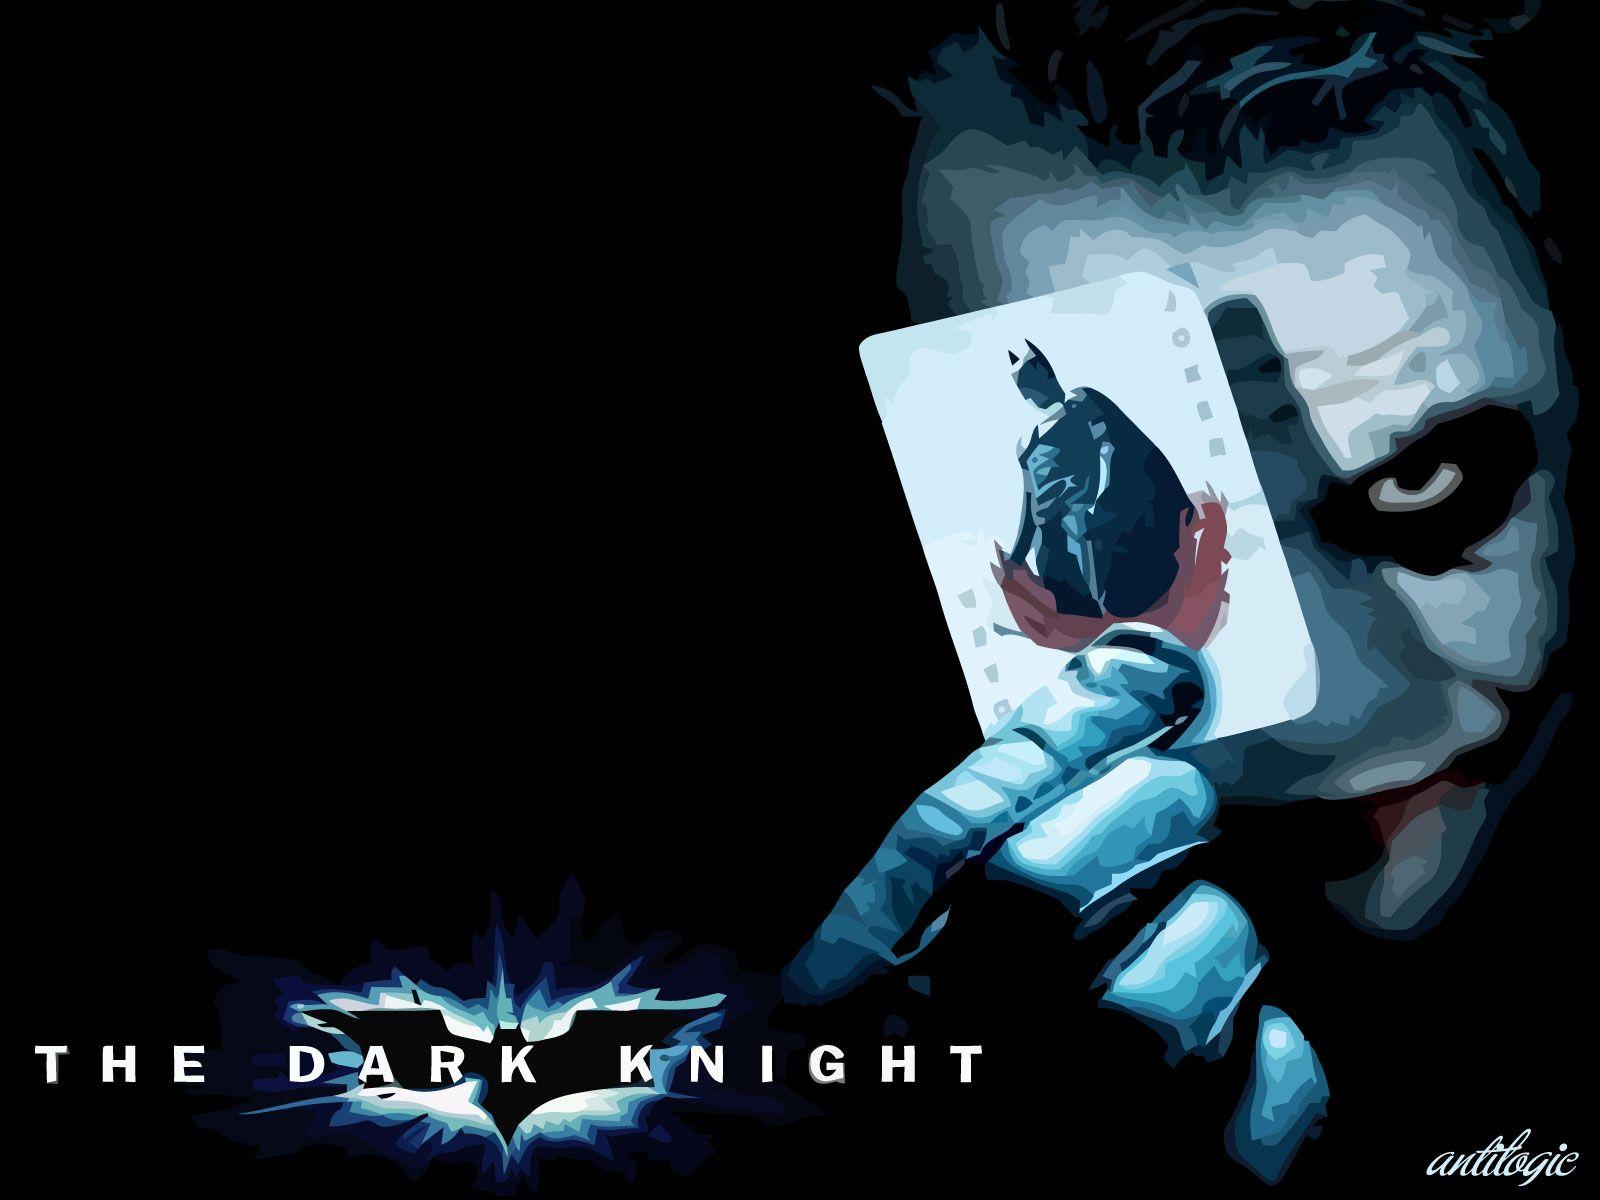 The Dark Knight Theme Song. Movie Theme Songs & TV Soundtracks